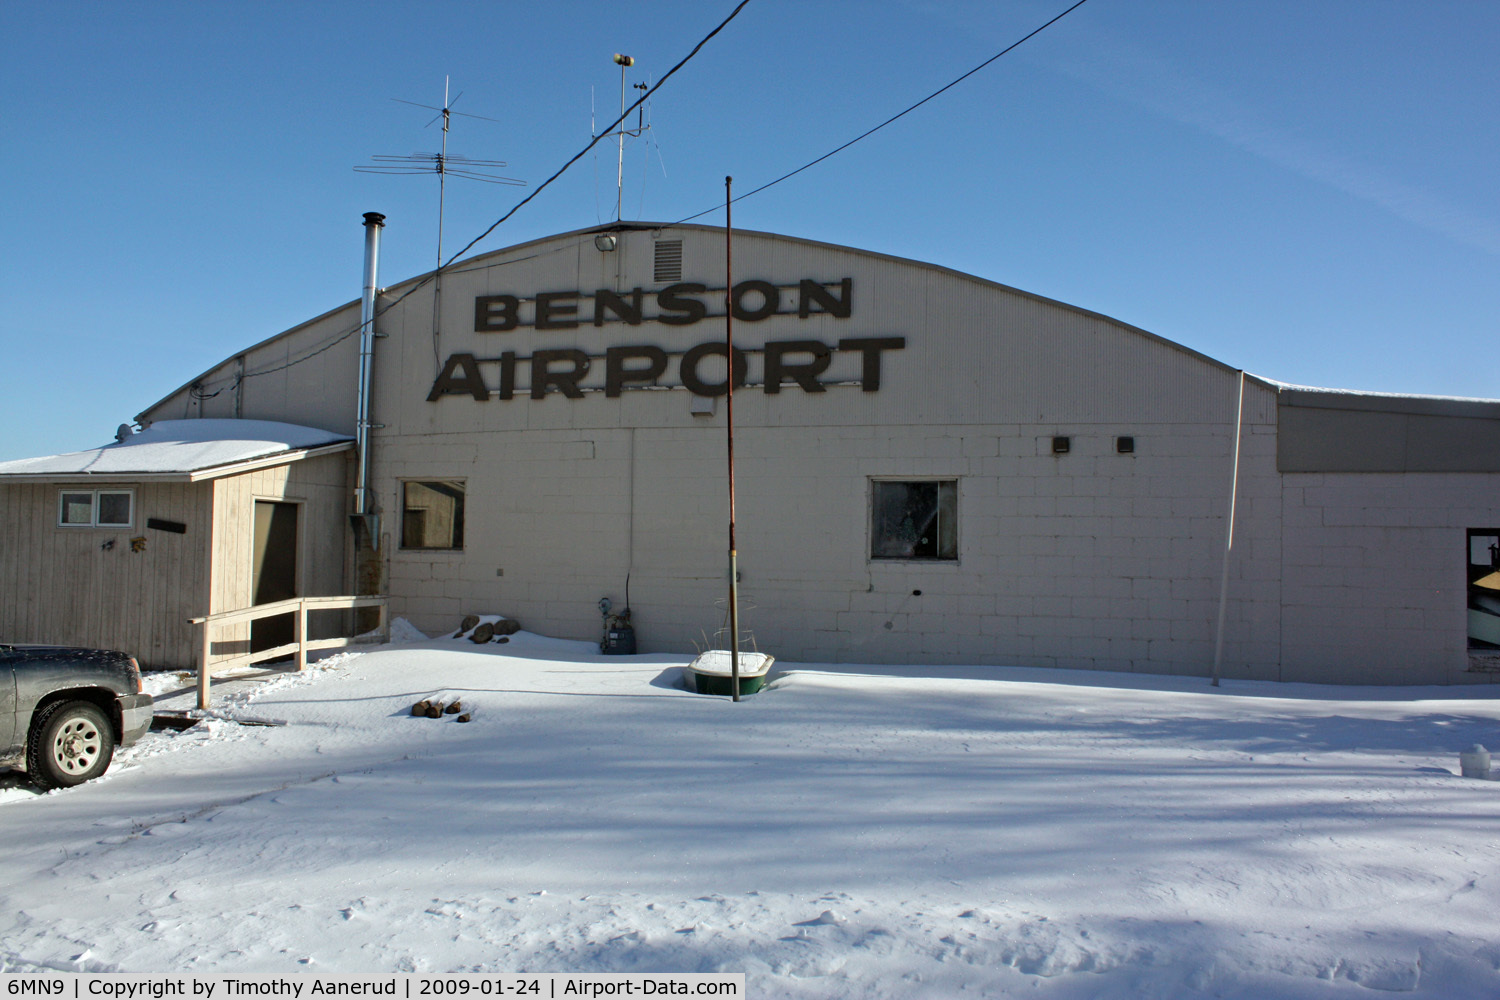 Benson Airport (6MN9) - The main hangar